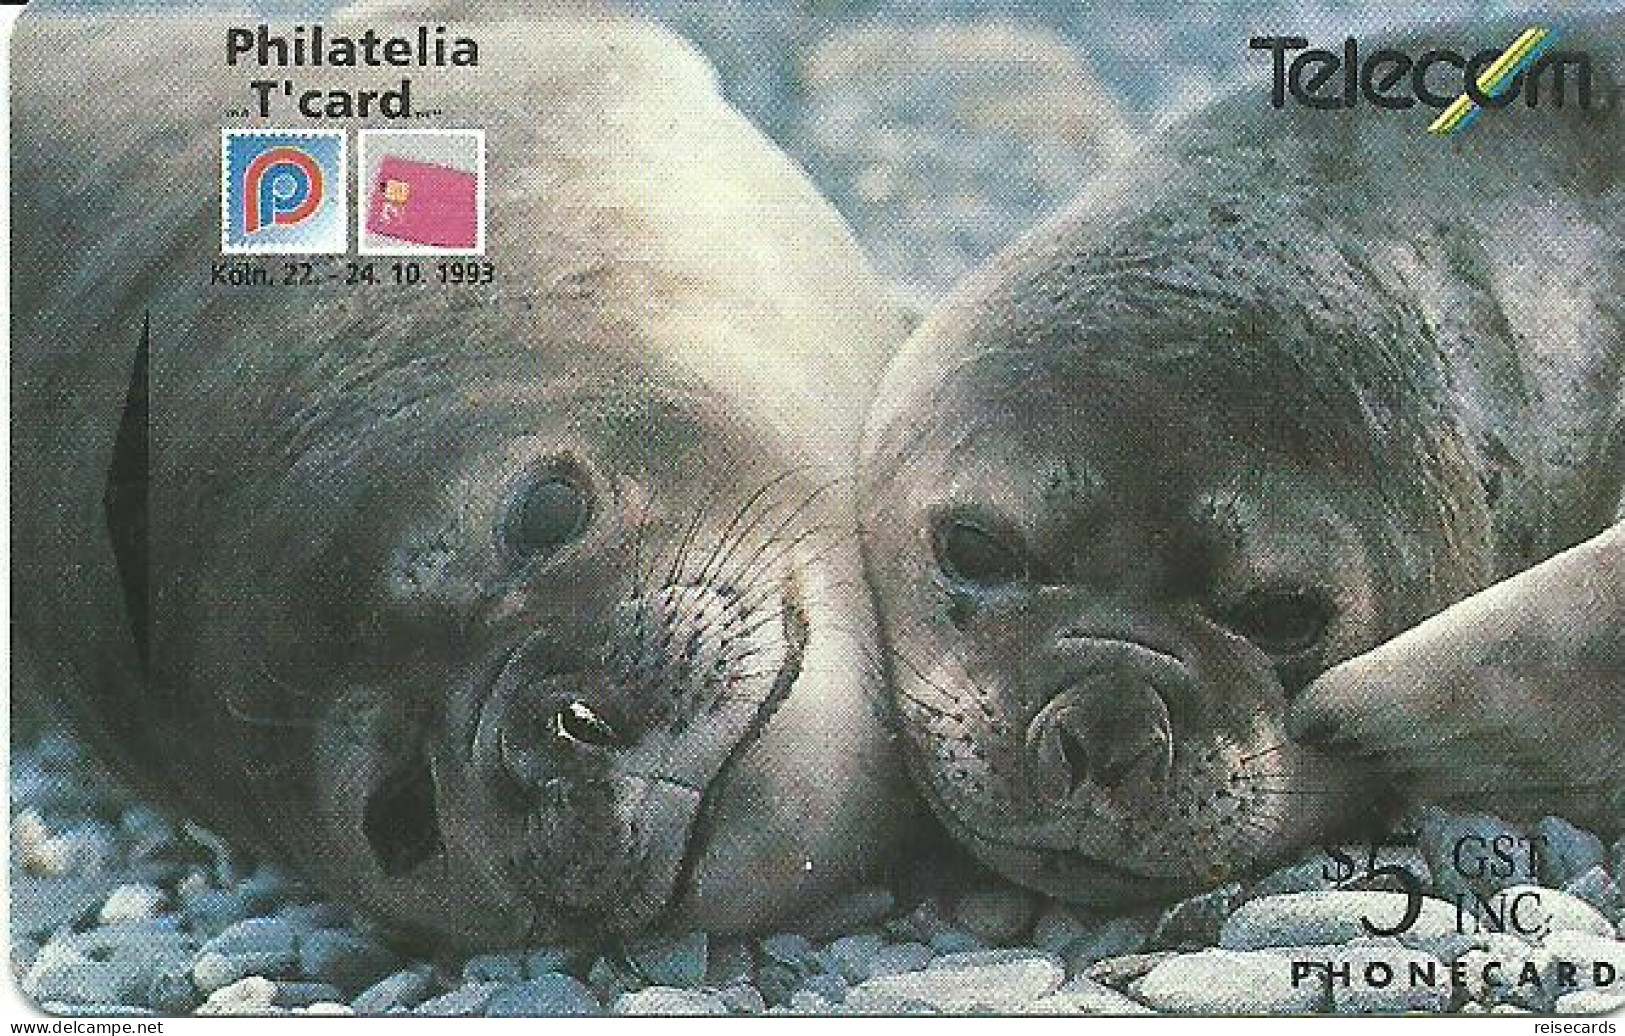 New Zealand: Telecom - 1993 Philatelia And T'card Exhibion Köln 93, Fur Seals - Nieuw-Zeeland